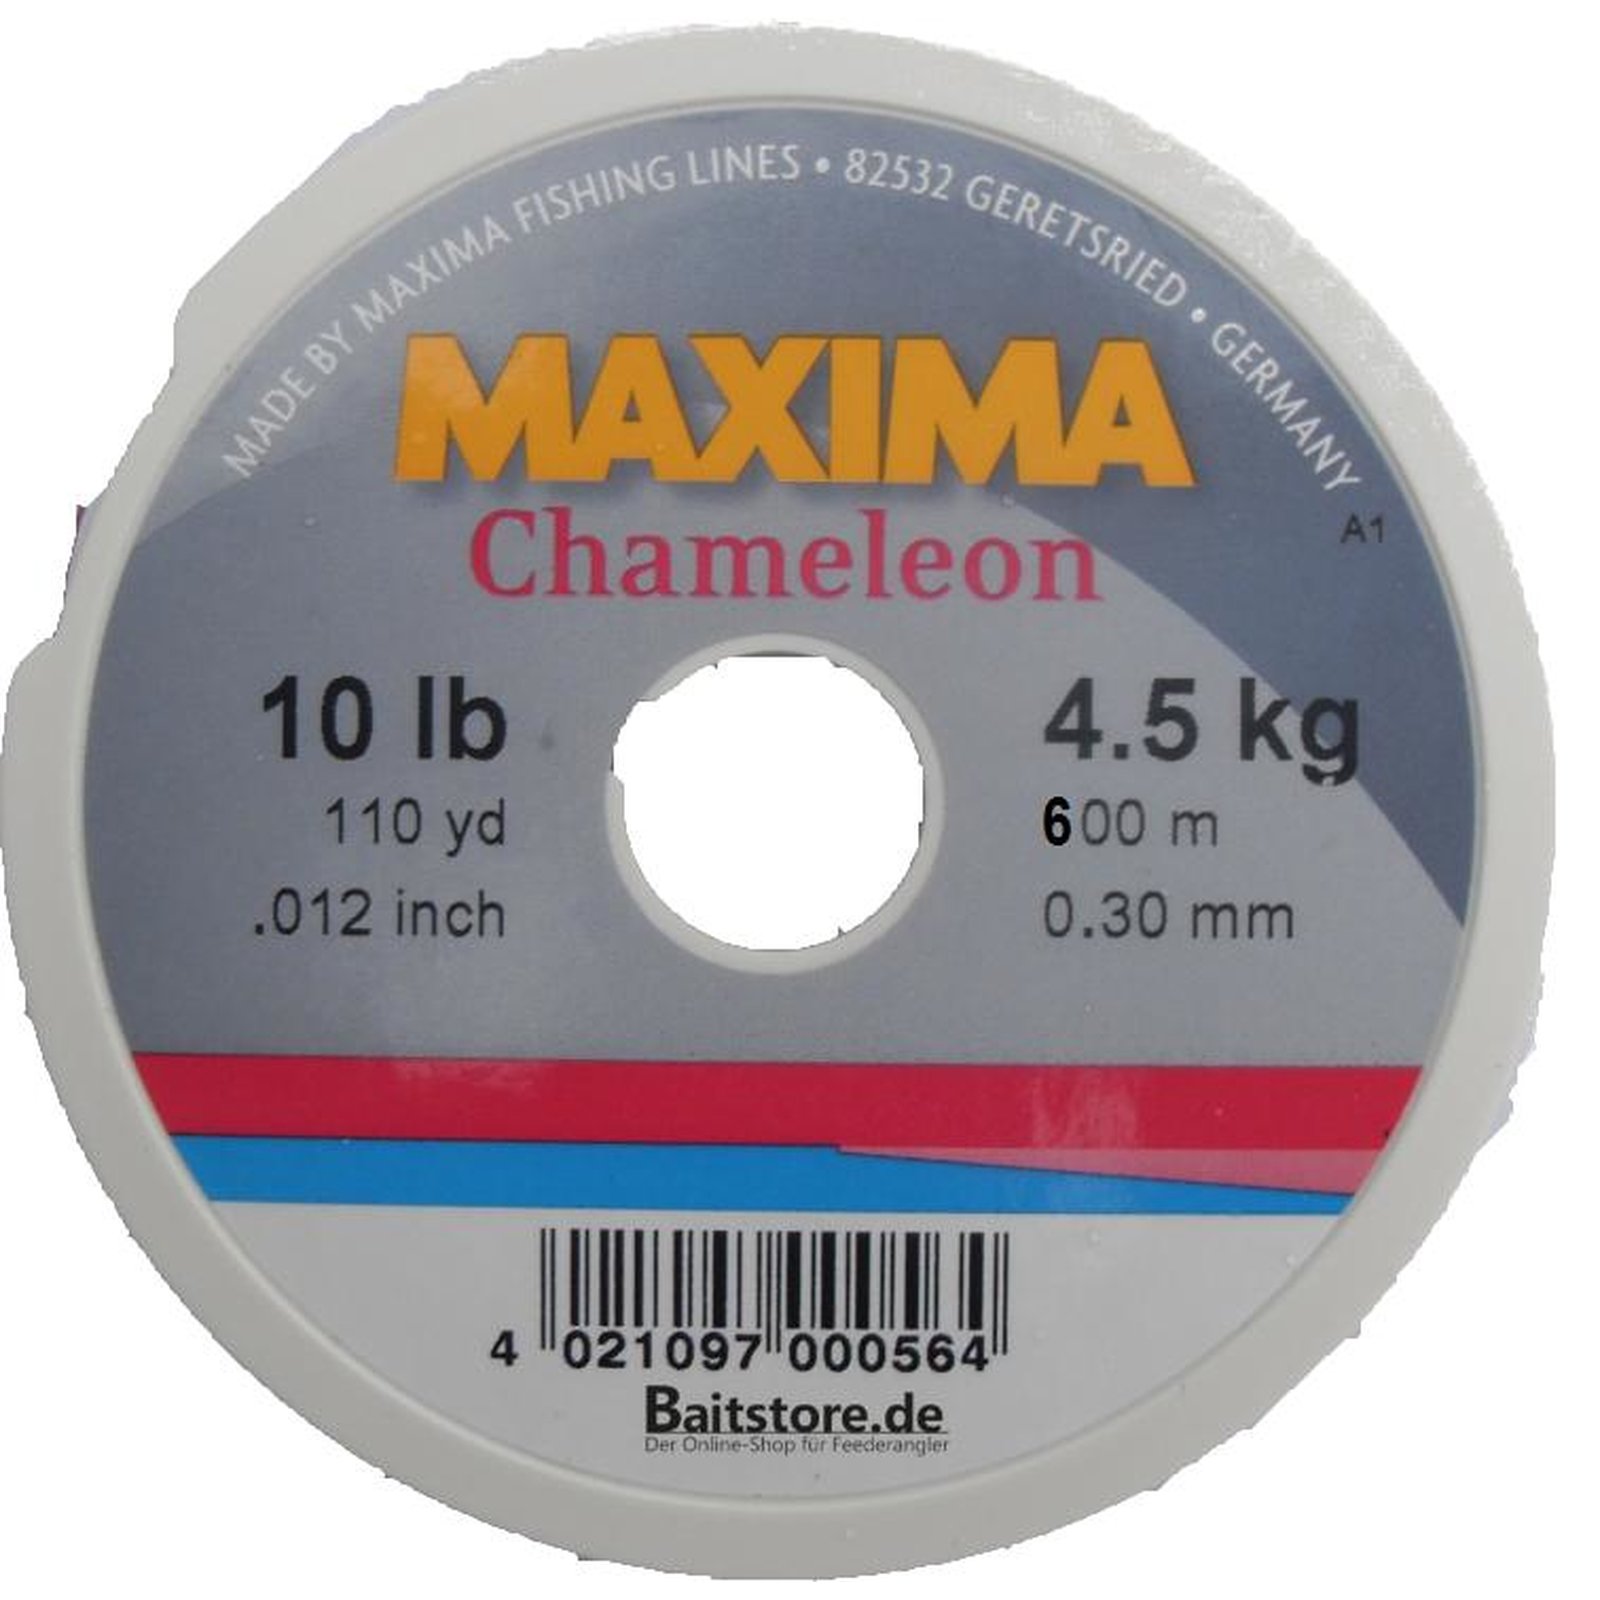 Maxima Chameleon - 600m Spule 0.30 mm